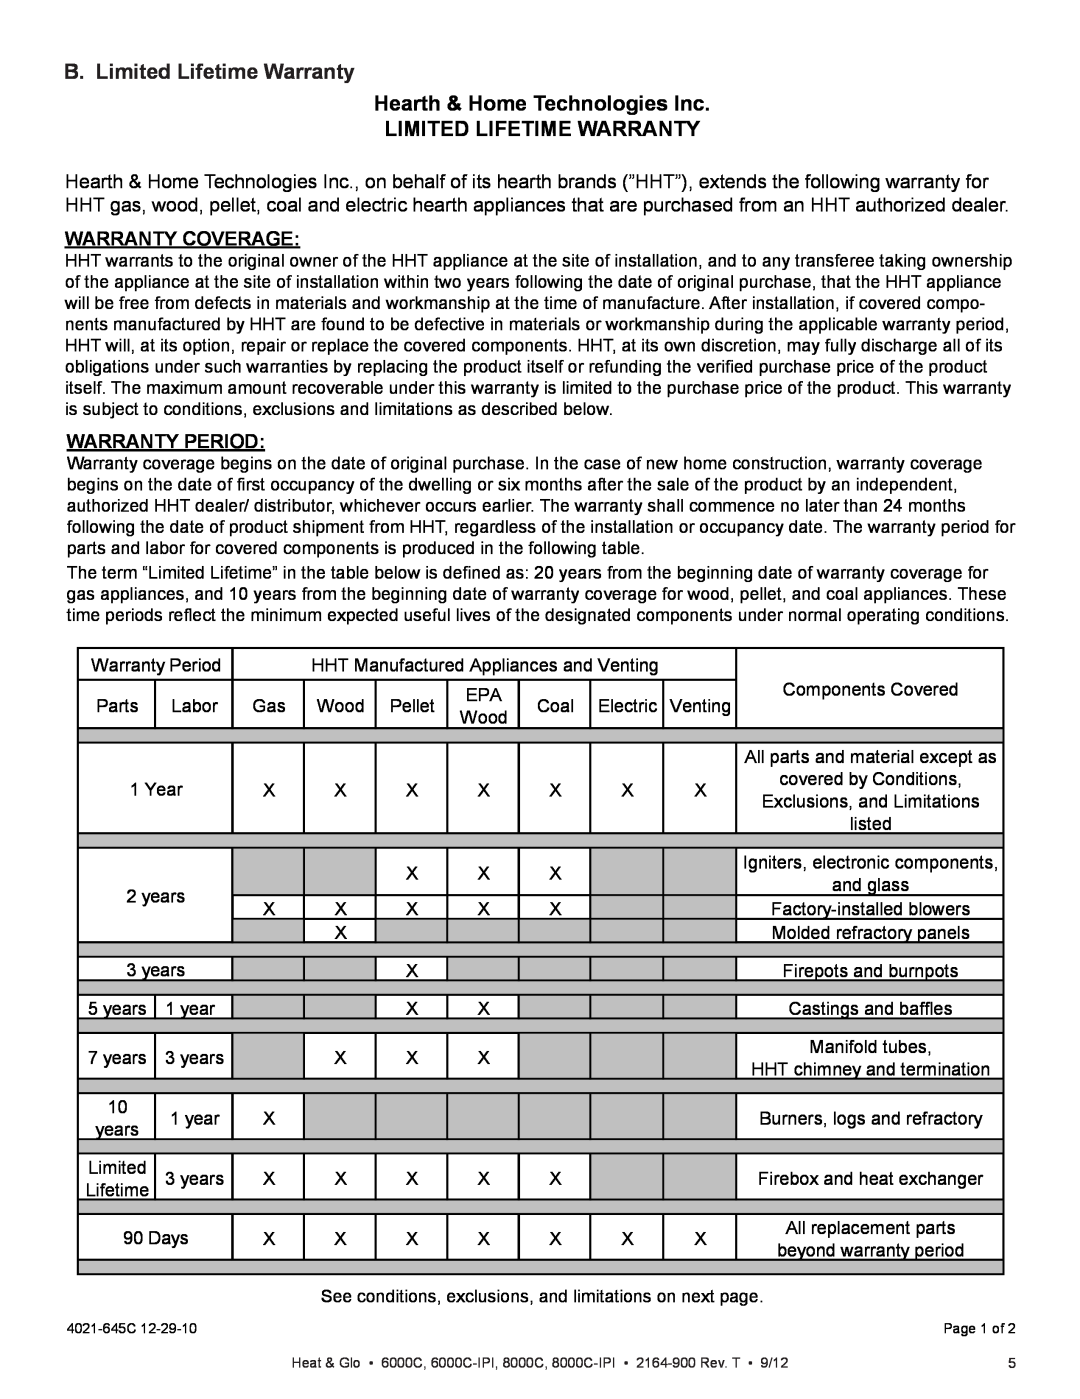 Heat & Glo LifeStyle 6000C manual B. Limited Lifetime Warranty, Hearth & Home Technologies Inc, Warranty Coverage 